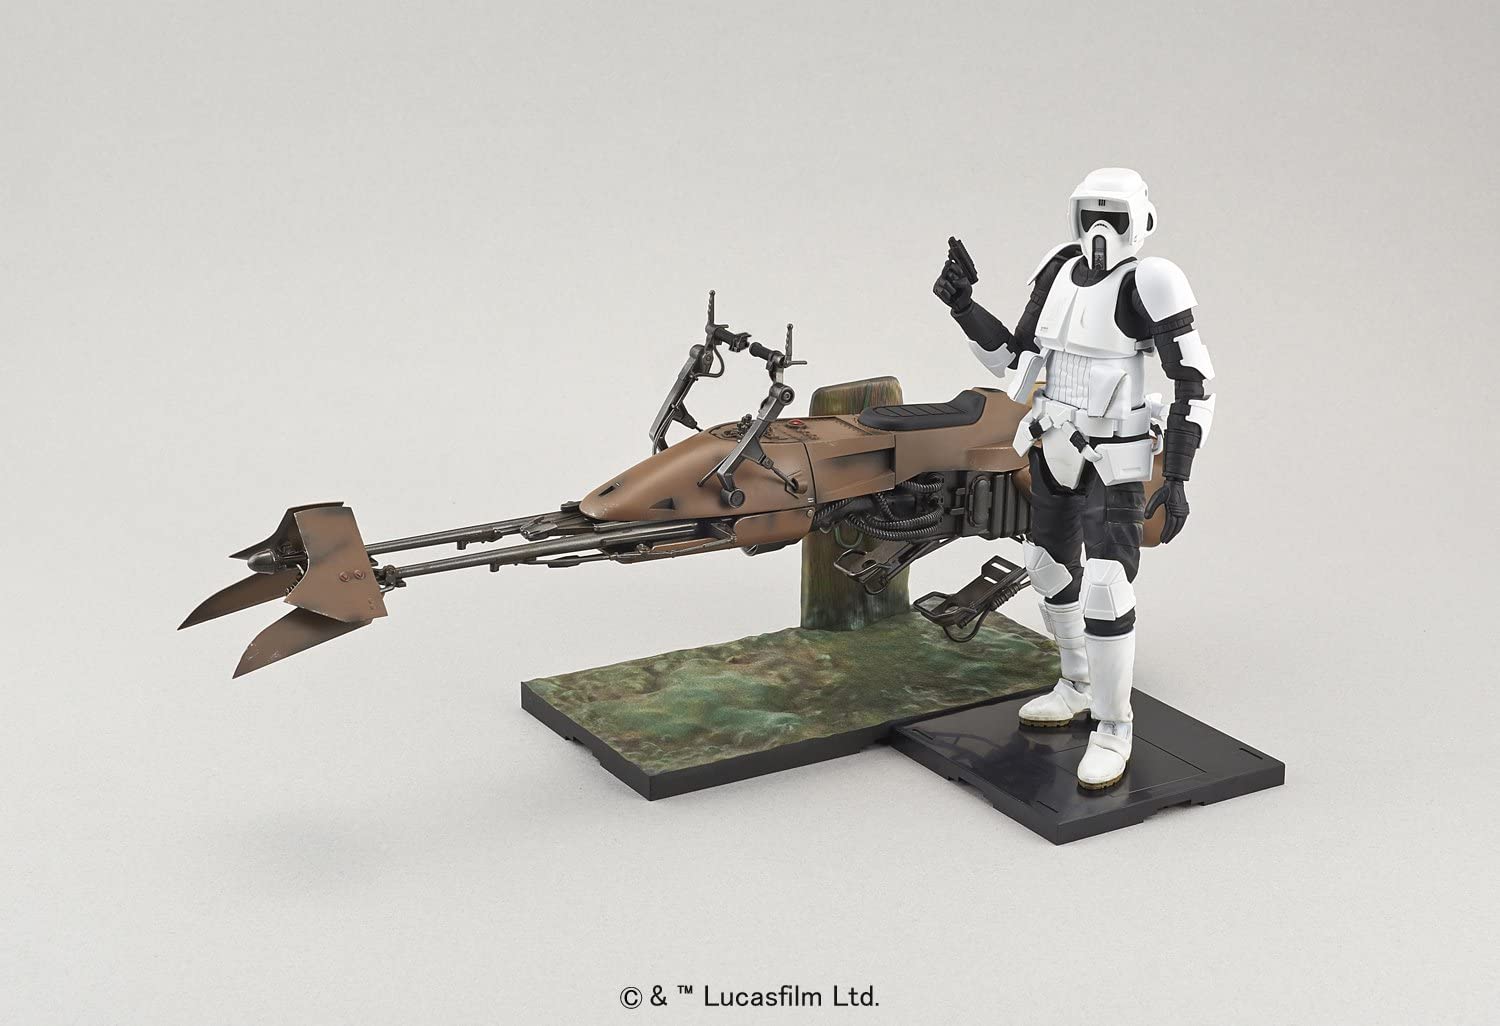 Bandai Hobby Gunpla Model Kit: Star Wars - Scout Trooper y Speeder Bike Escala 1/12 Kit de Plastico